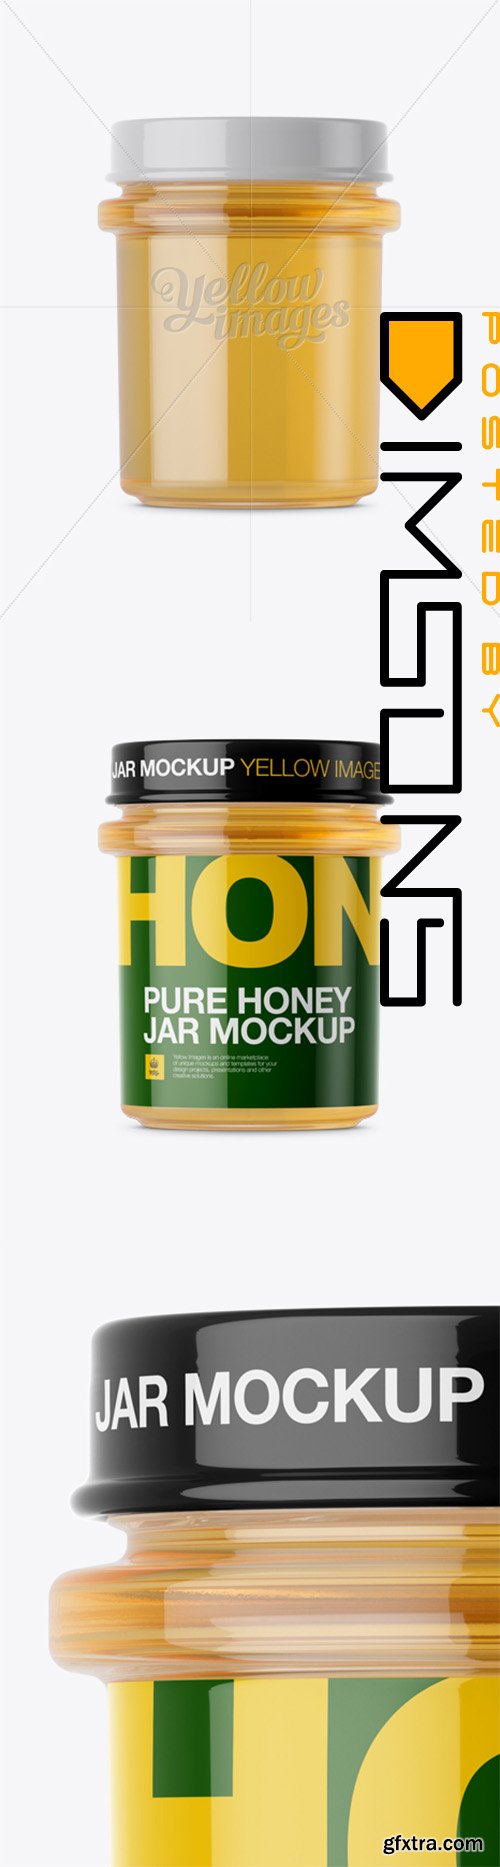 Pure Honey Jar Mockup - Front View 13879